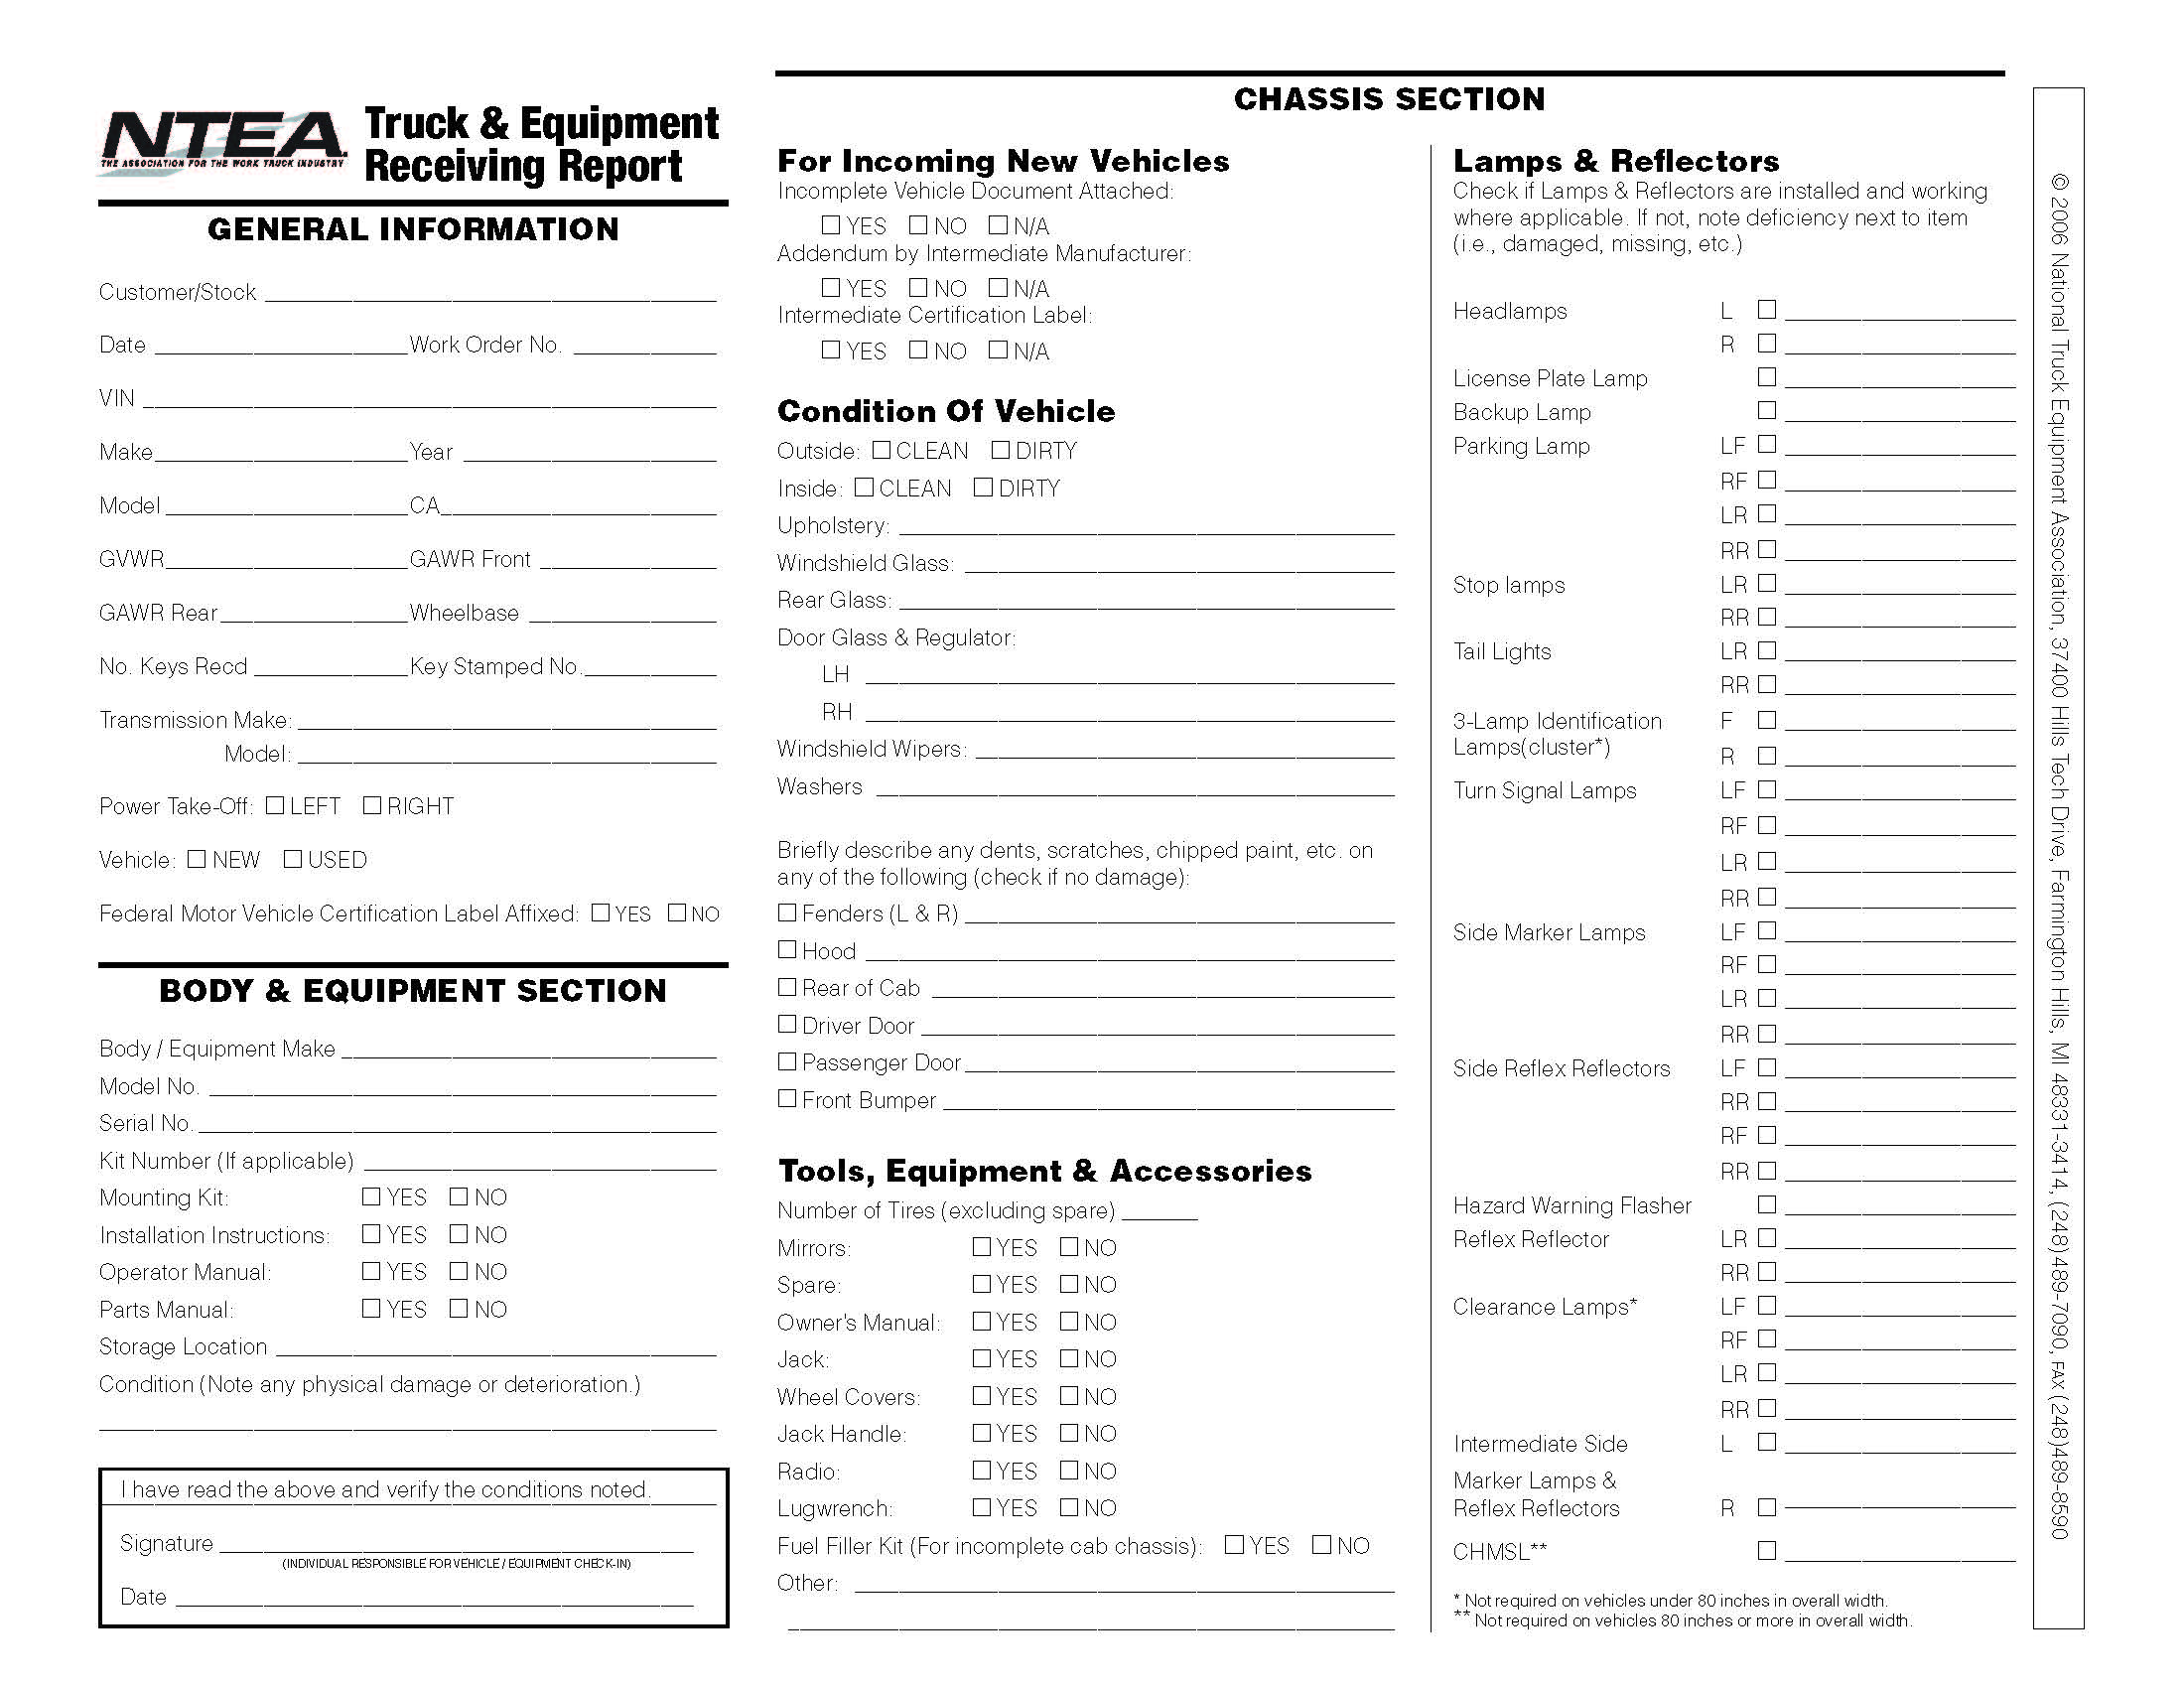 Truck & Equipment Receiving Report (sample form)